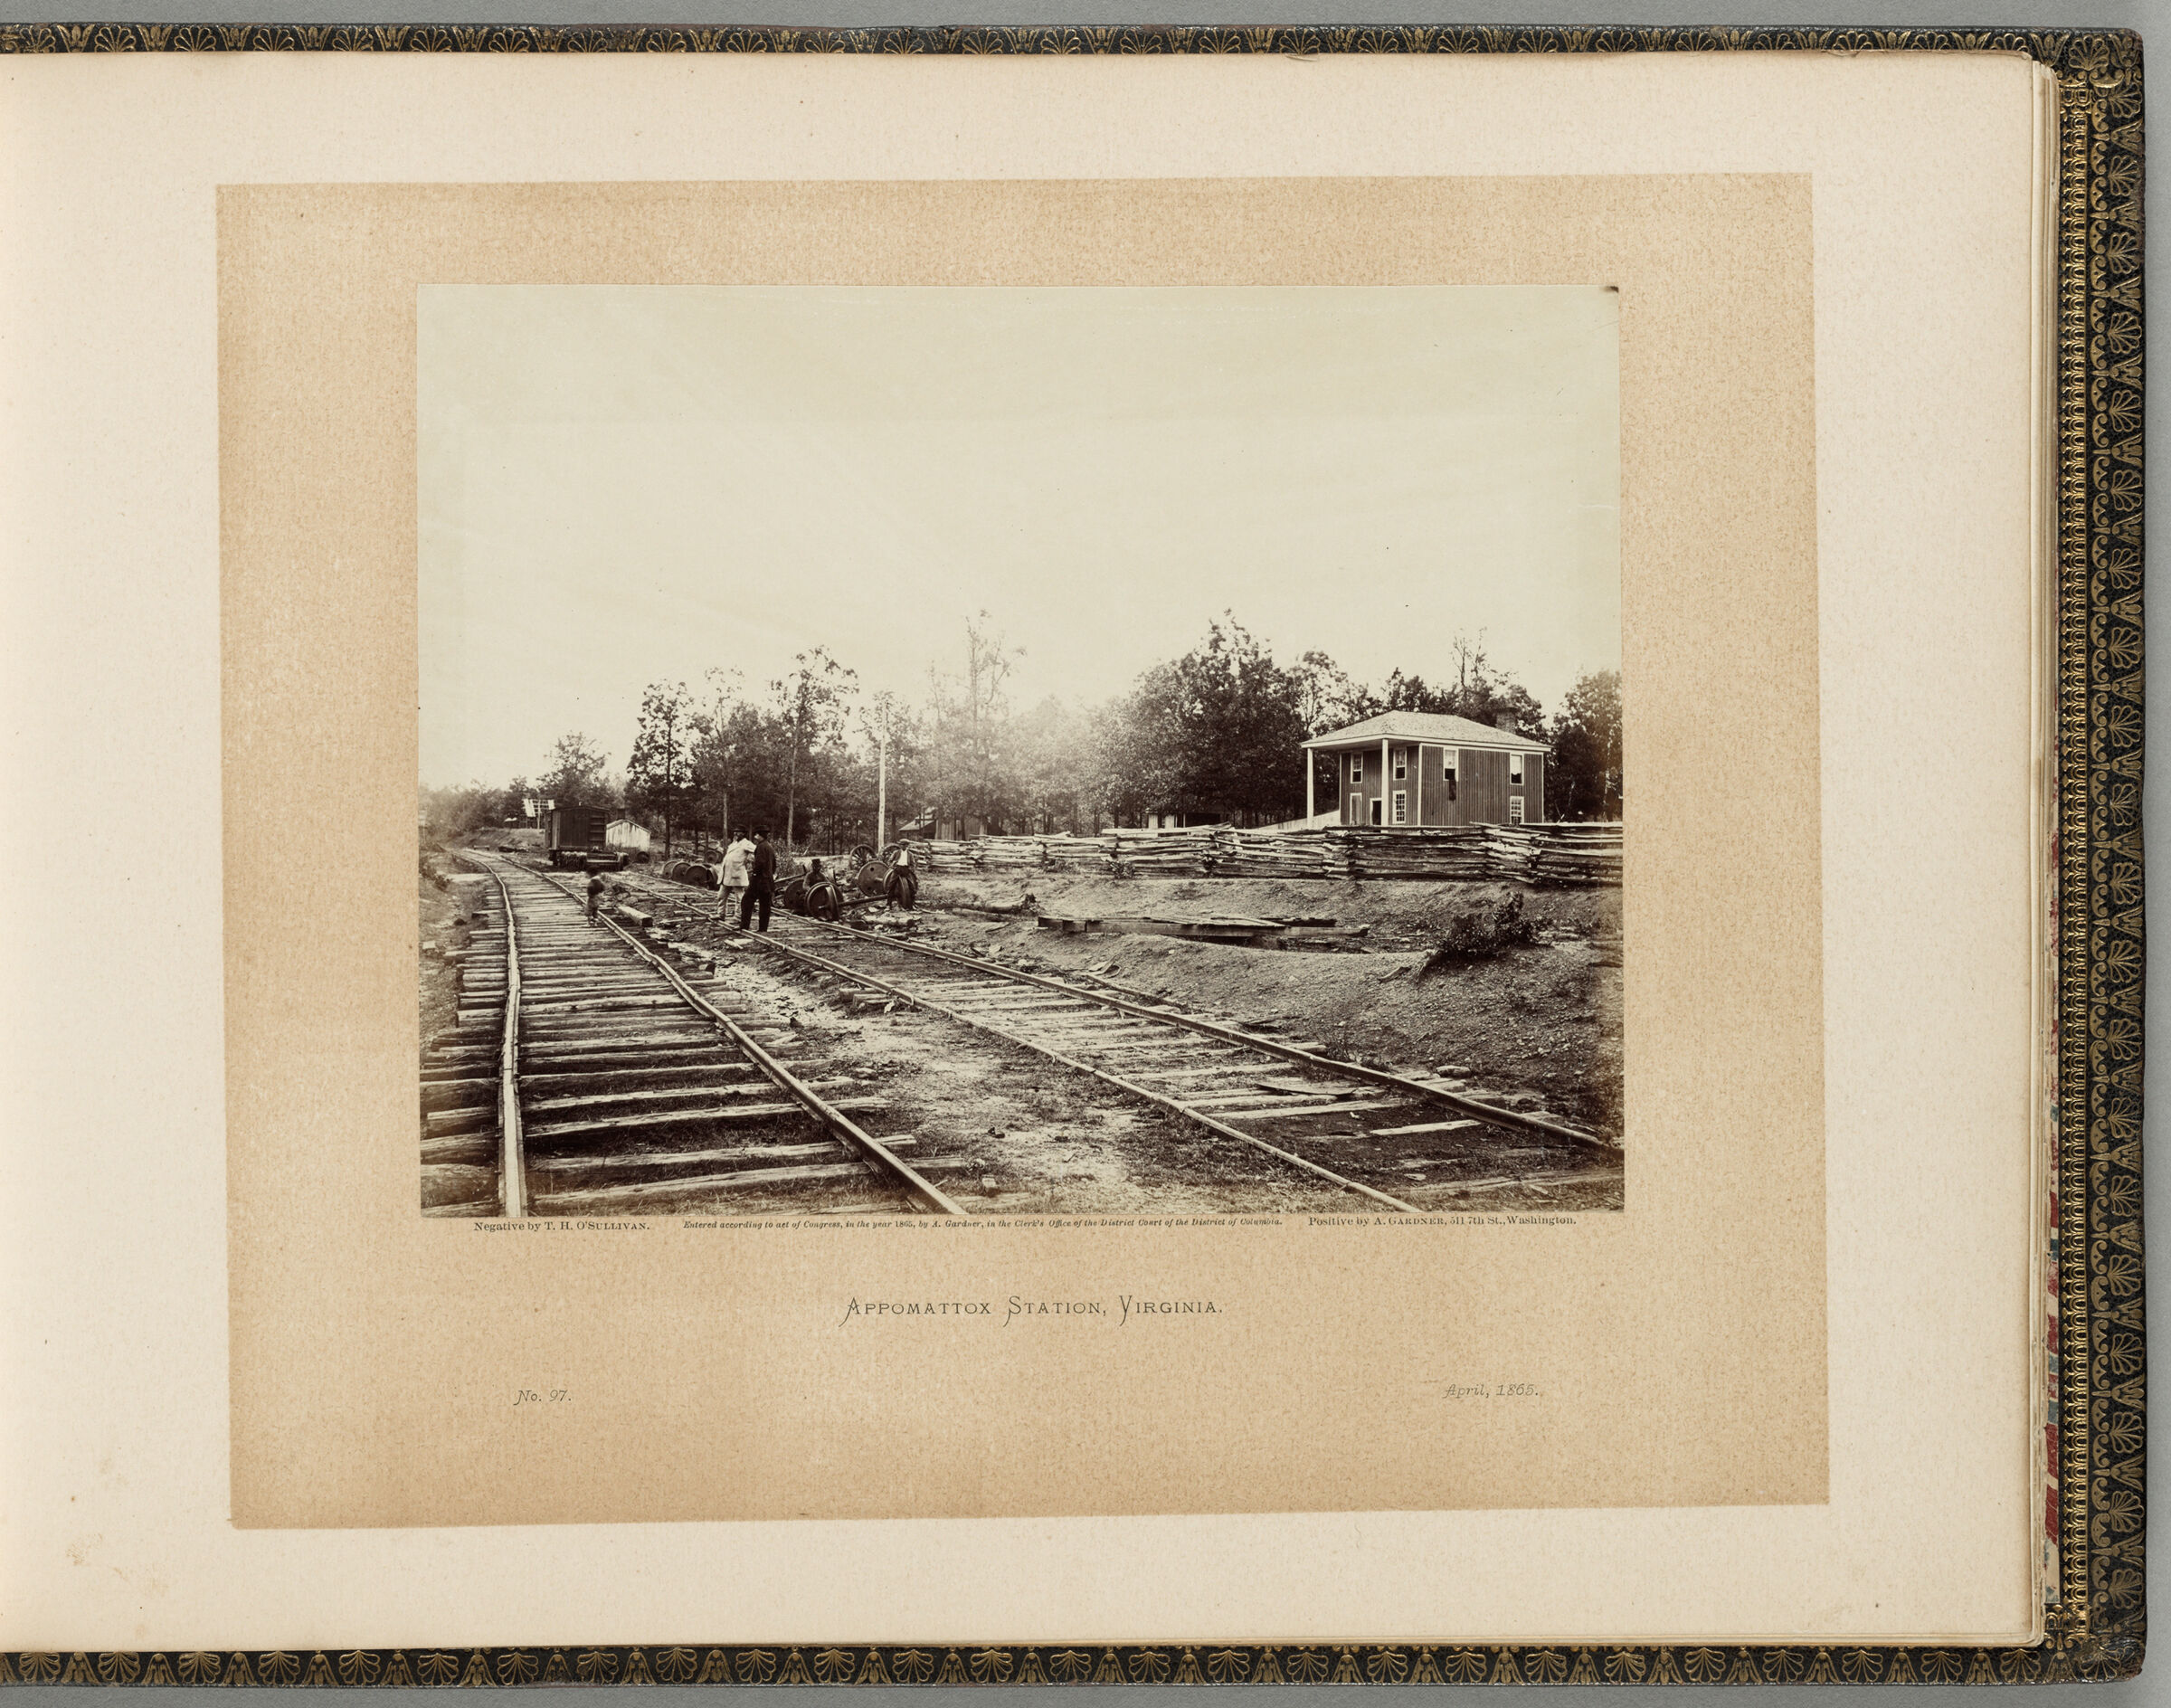 Appomattox Station, Virginia